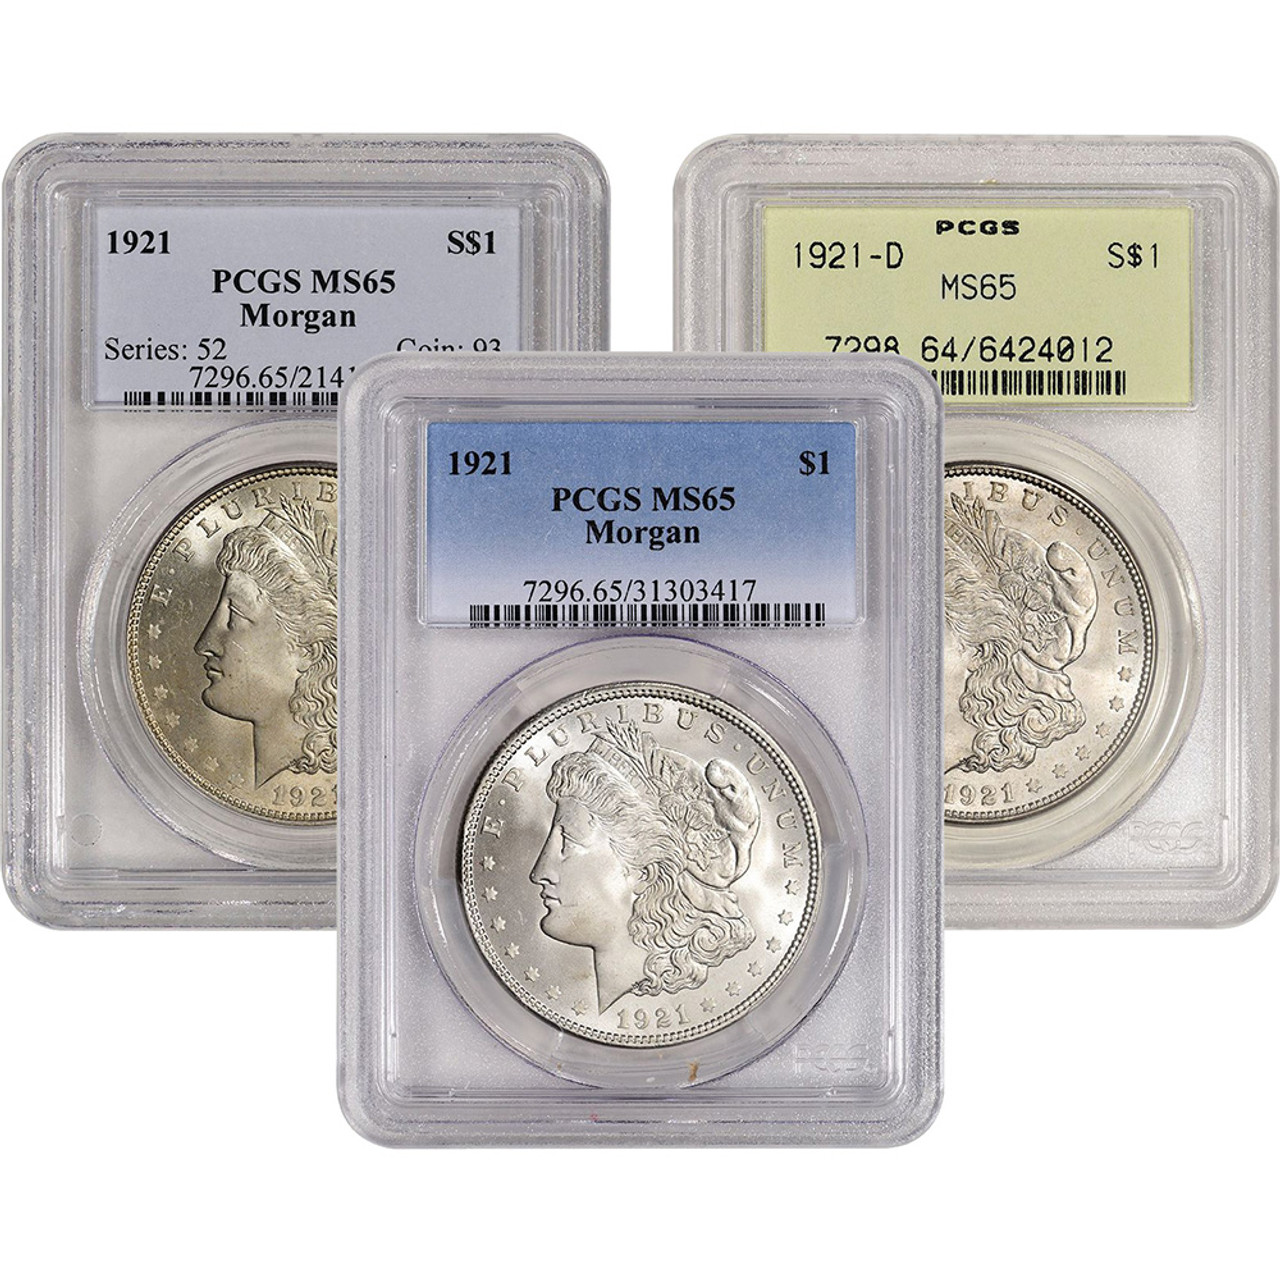 1921 US Morgan Silver Dollar $1 - PCGS MS65 - Random Label [21 